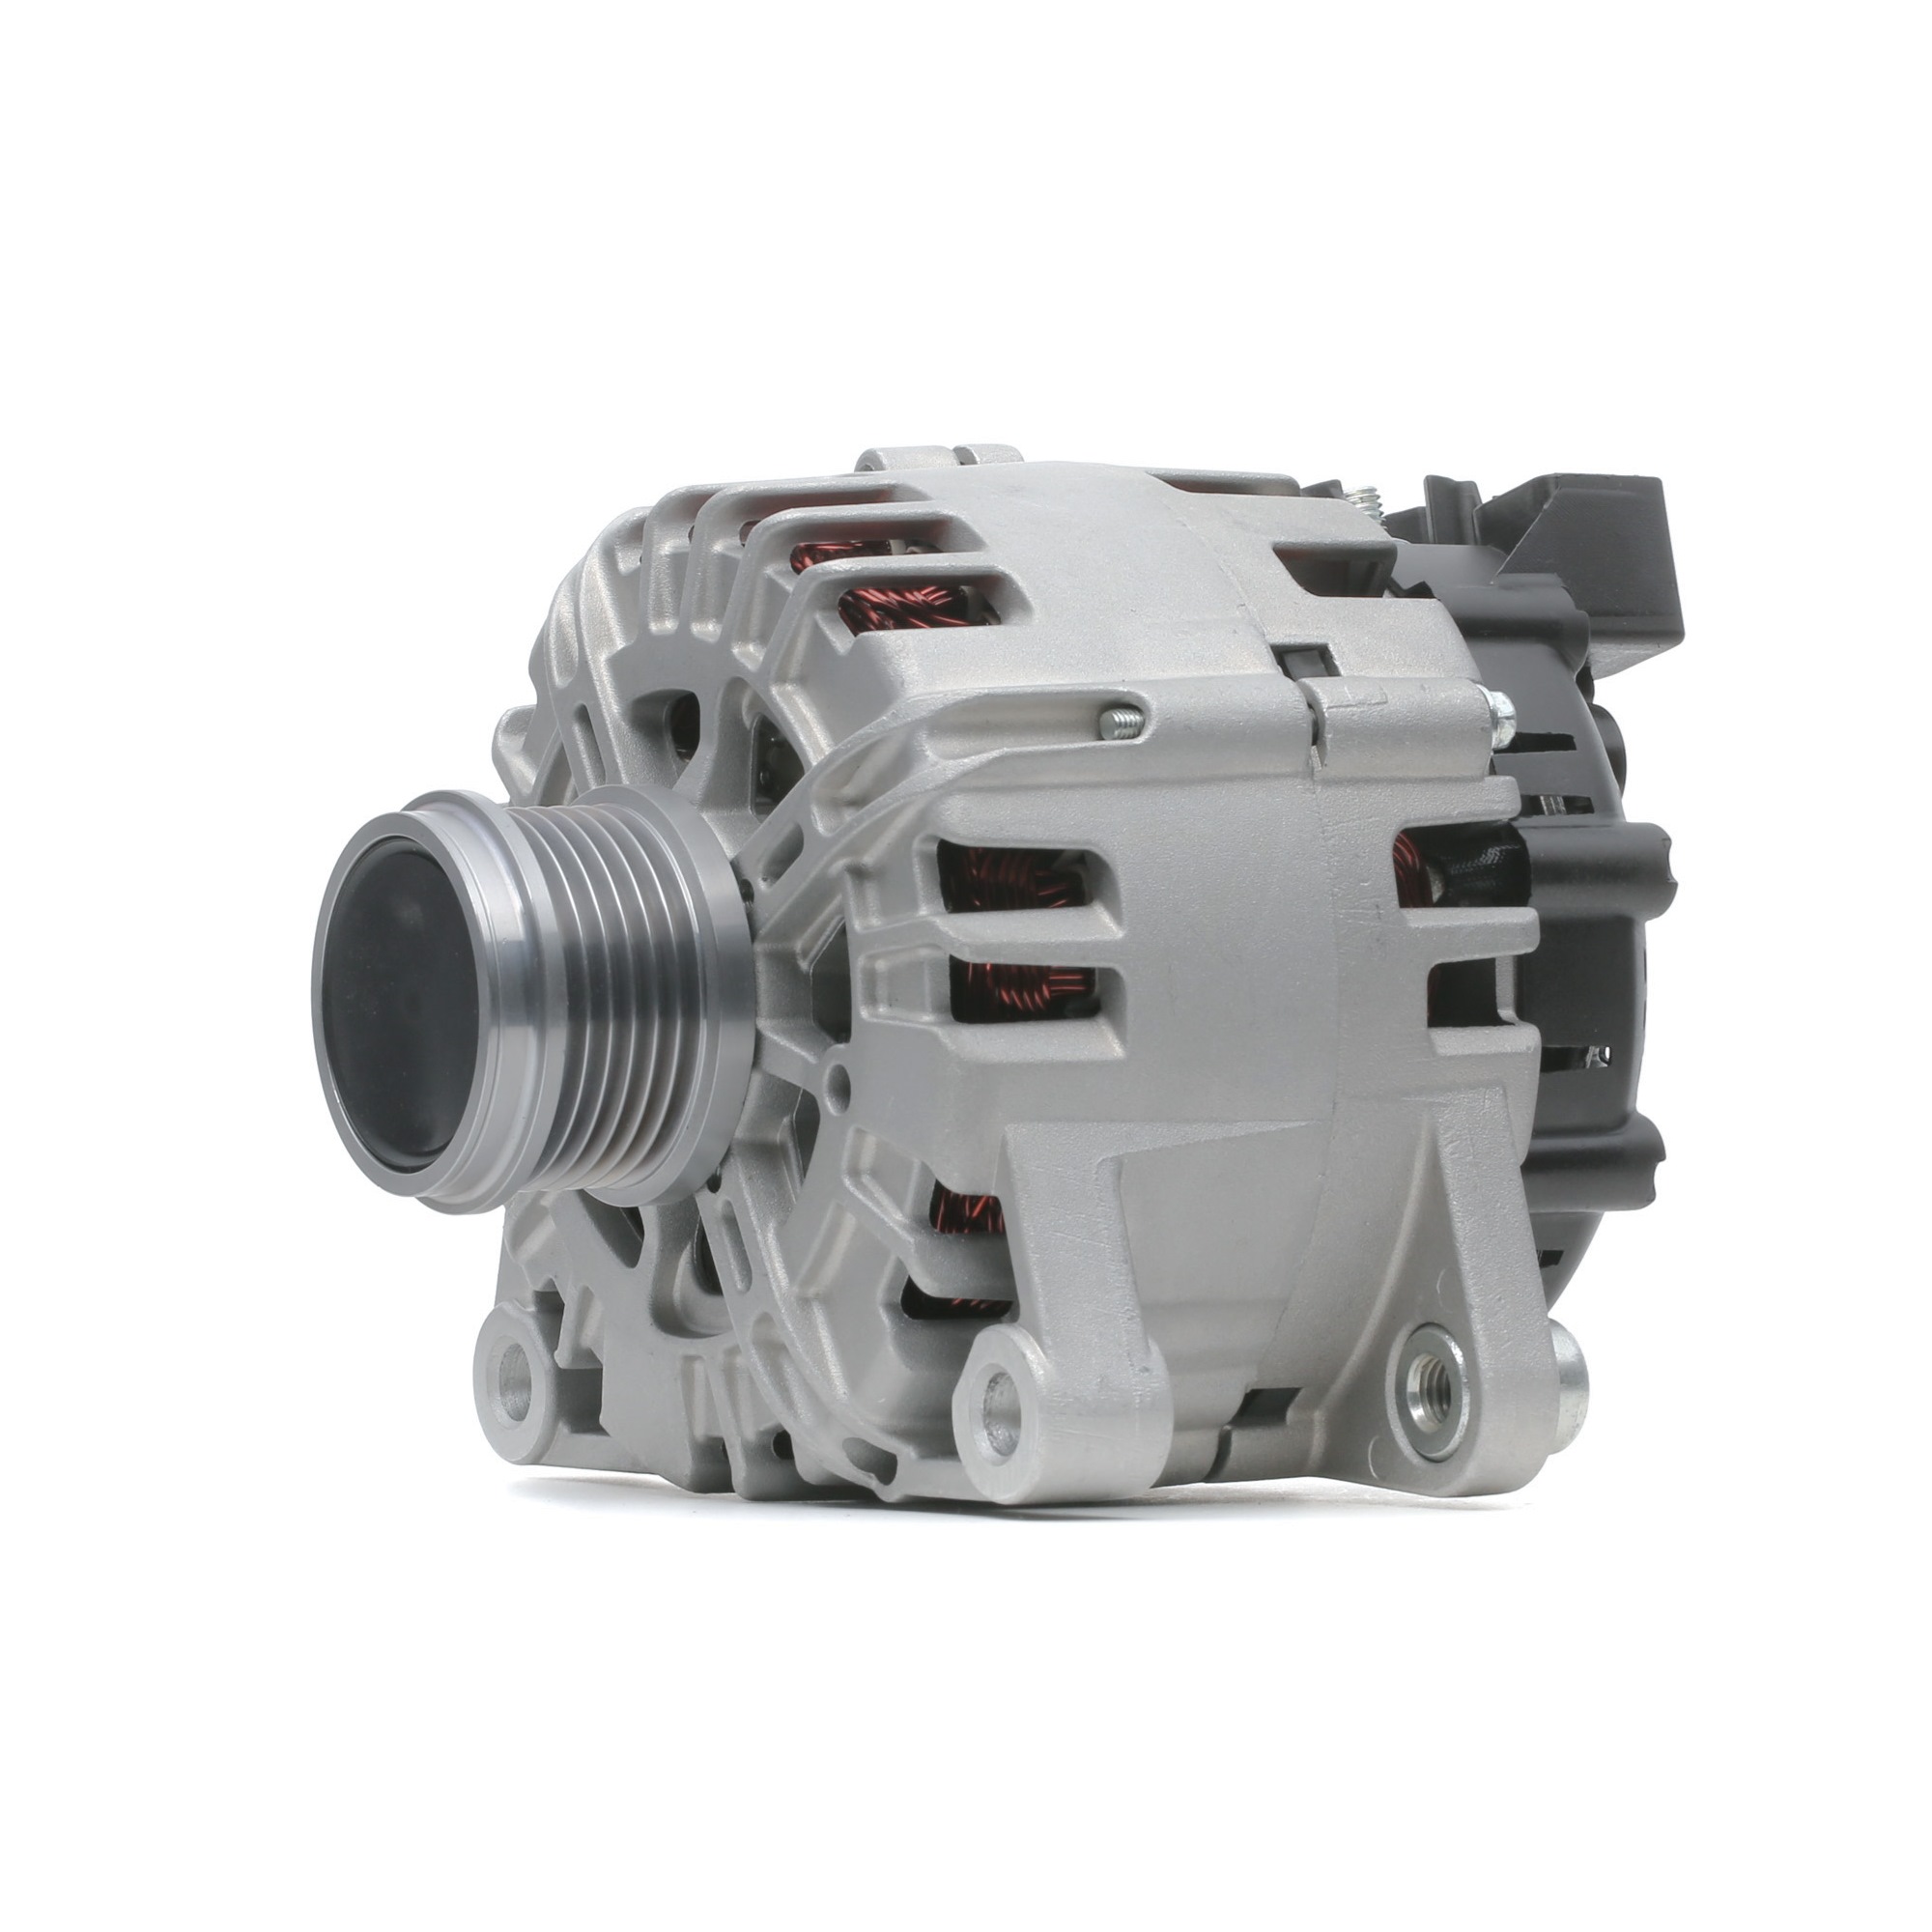 RIDEX 4G0329 Alternator 12V, 150A, B+(M8),LIN, Com/LIN2 (Plug 213), L 80, excl. vacuum pump, Ø 54 mm, with integrated regulator